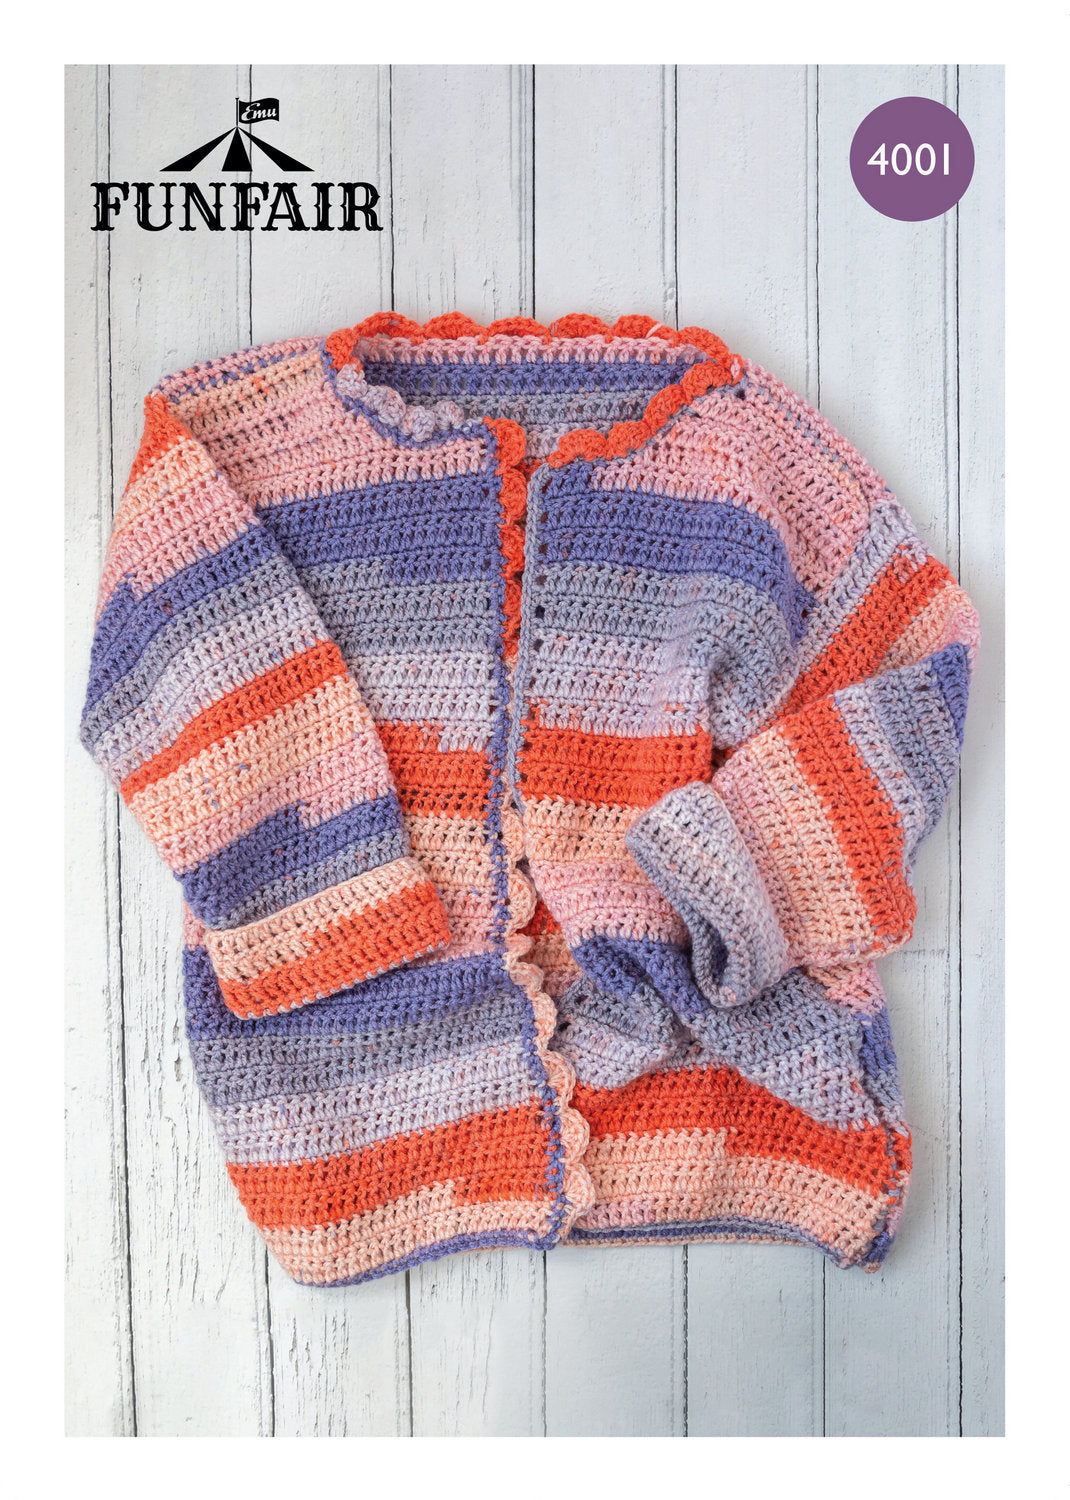 Emu Funfair Swirl DK Child's Comfy Crochet Cardigan - 4001